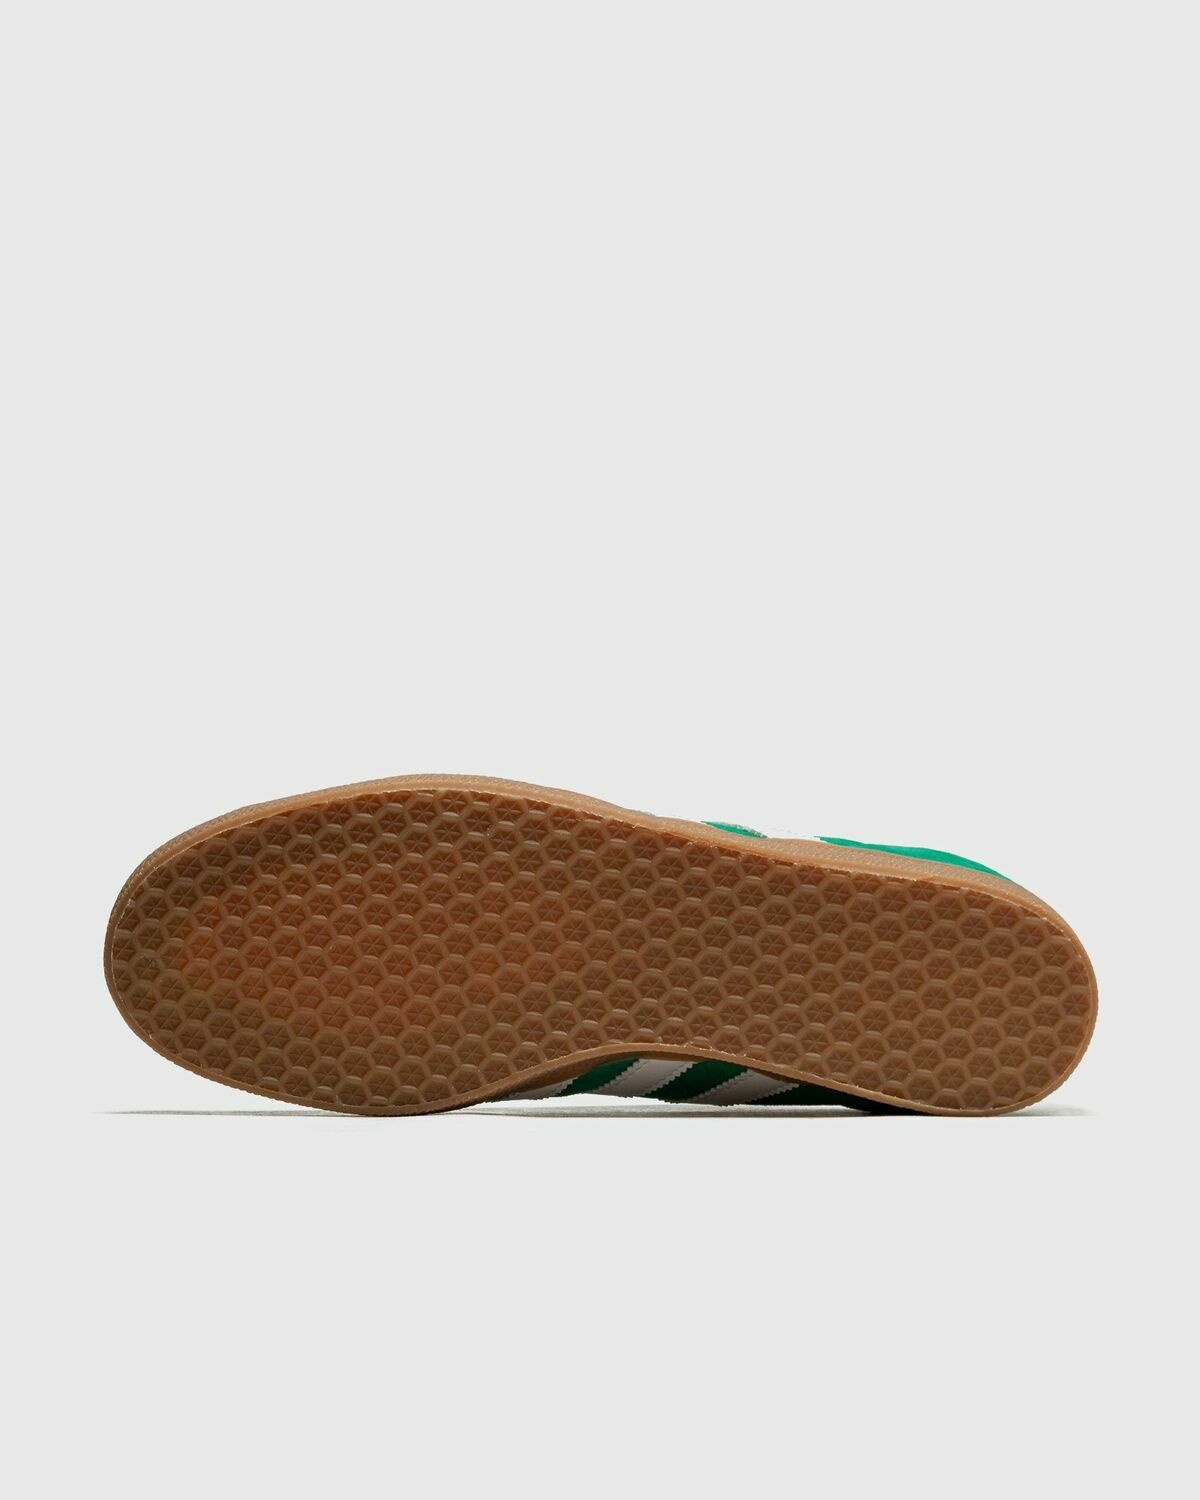 Adidas Gazelle Green - Mens - Lowtop adidas